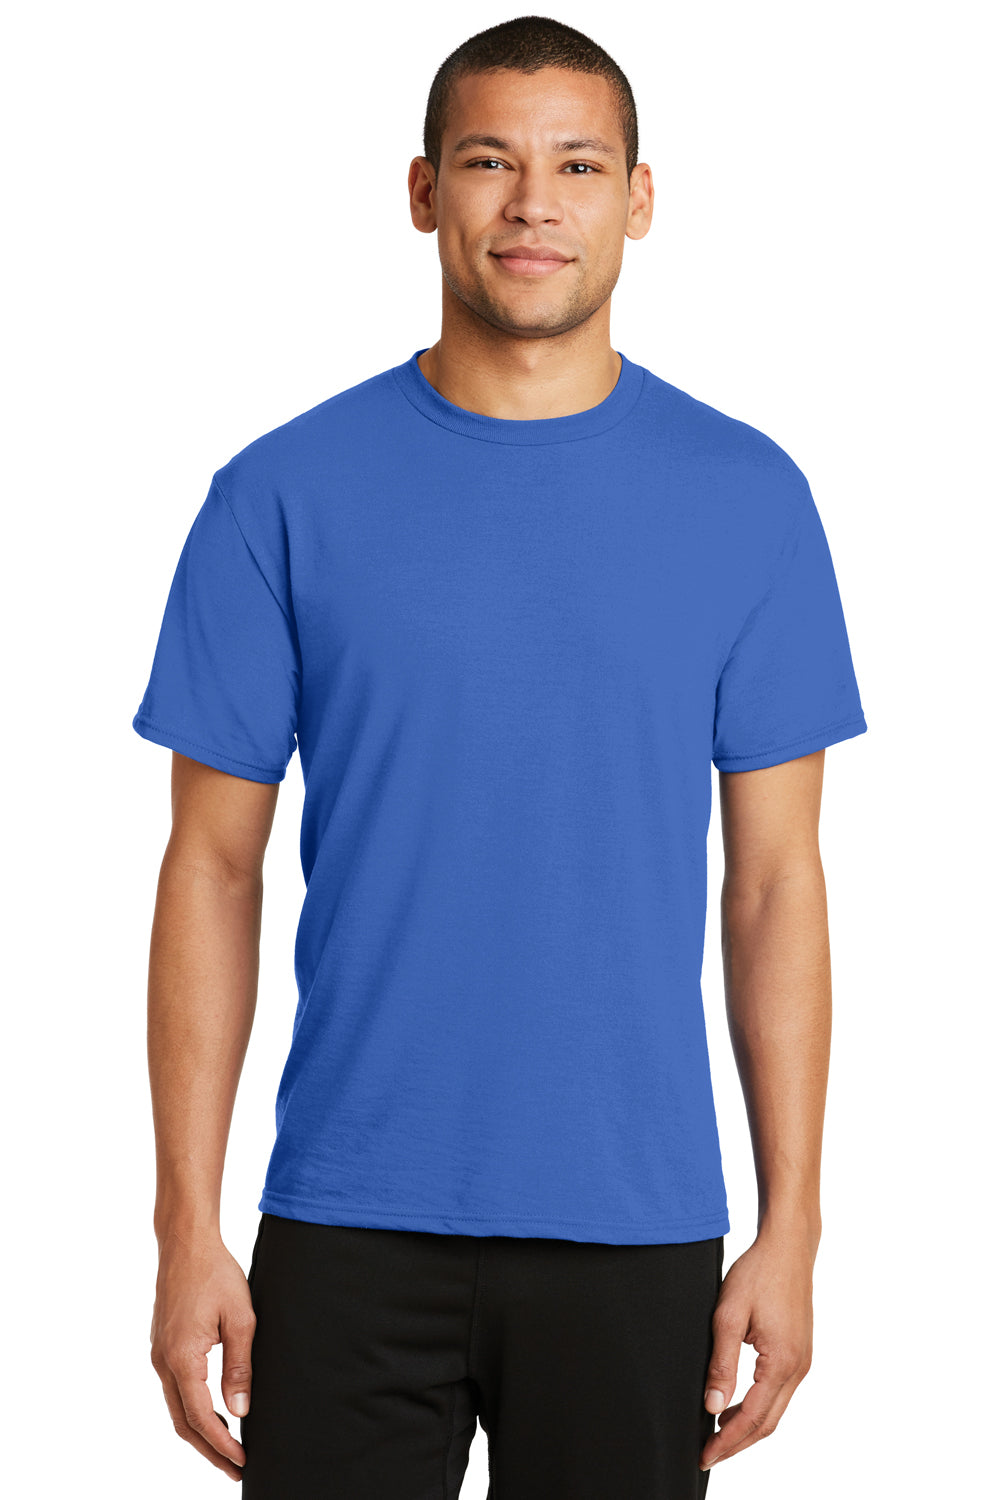 Port & Company PC381 Mens Dry Zone Performance Moisture Wicking Short Sleeve Crewneck T-Shirt Royal Blue Front